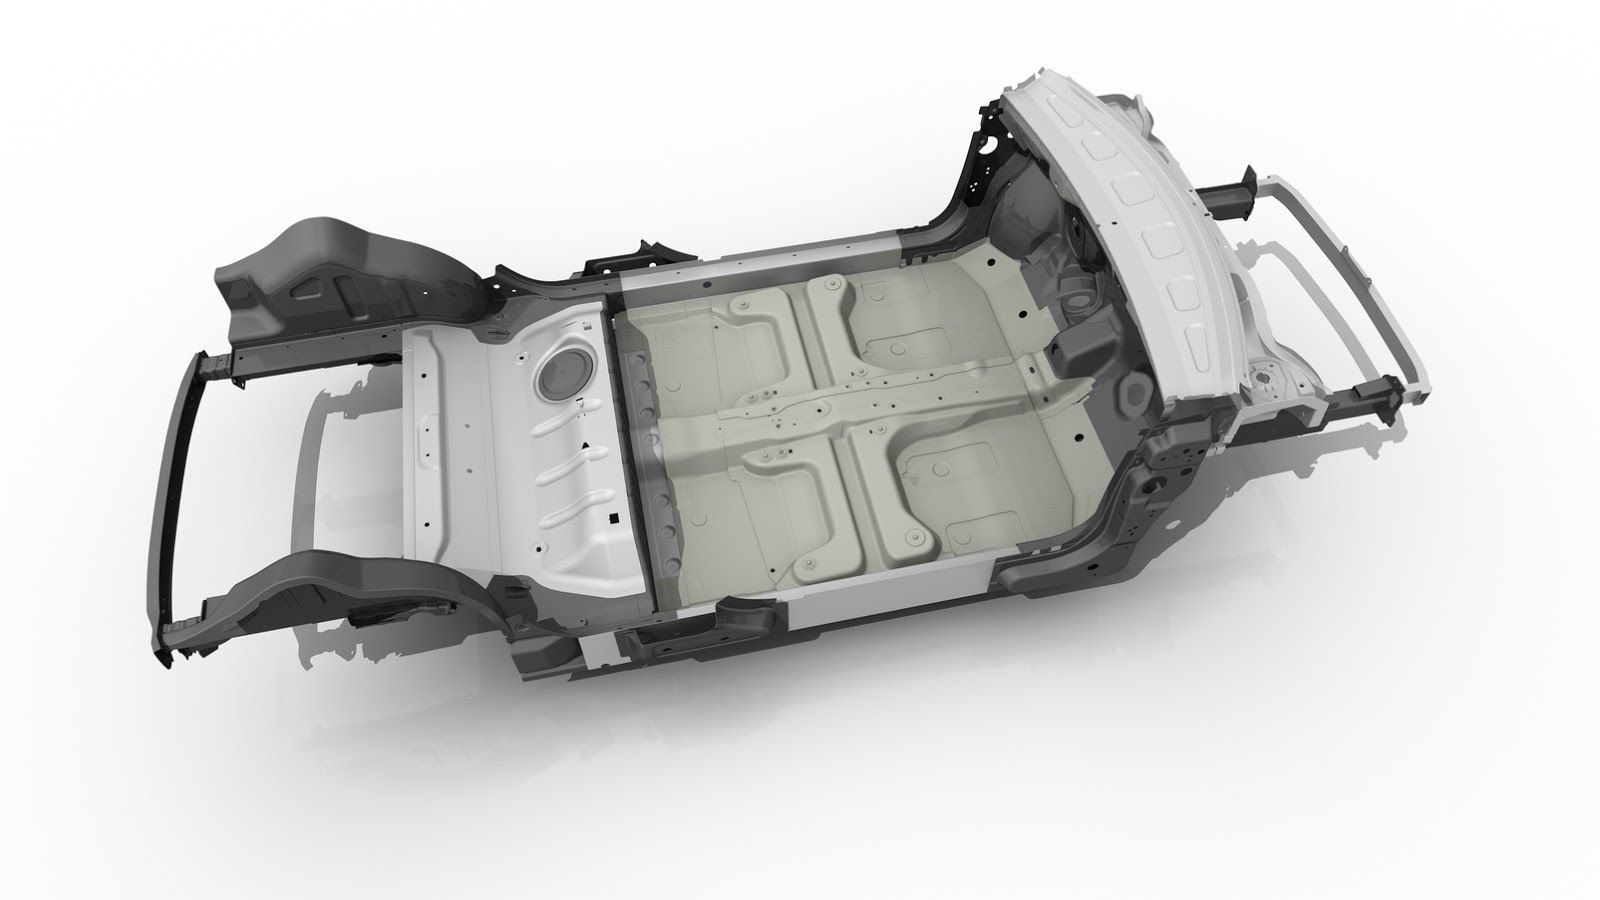 Citroen S C4 Cactus Airflow 2l Concept Proves Fuel Efficiency Can Look Good Carscoops